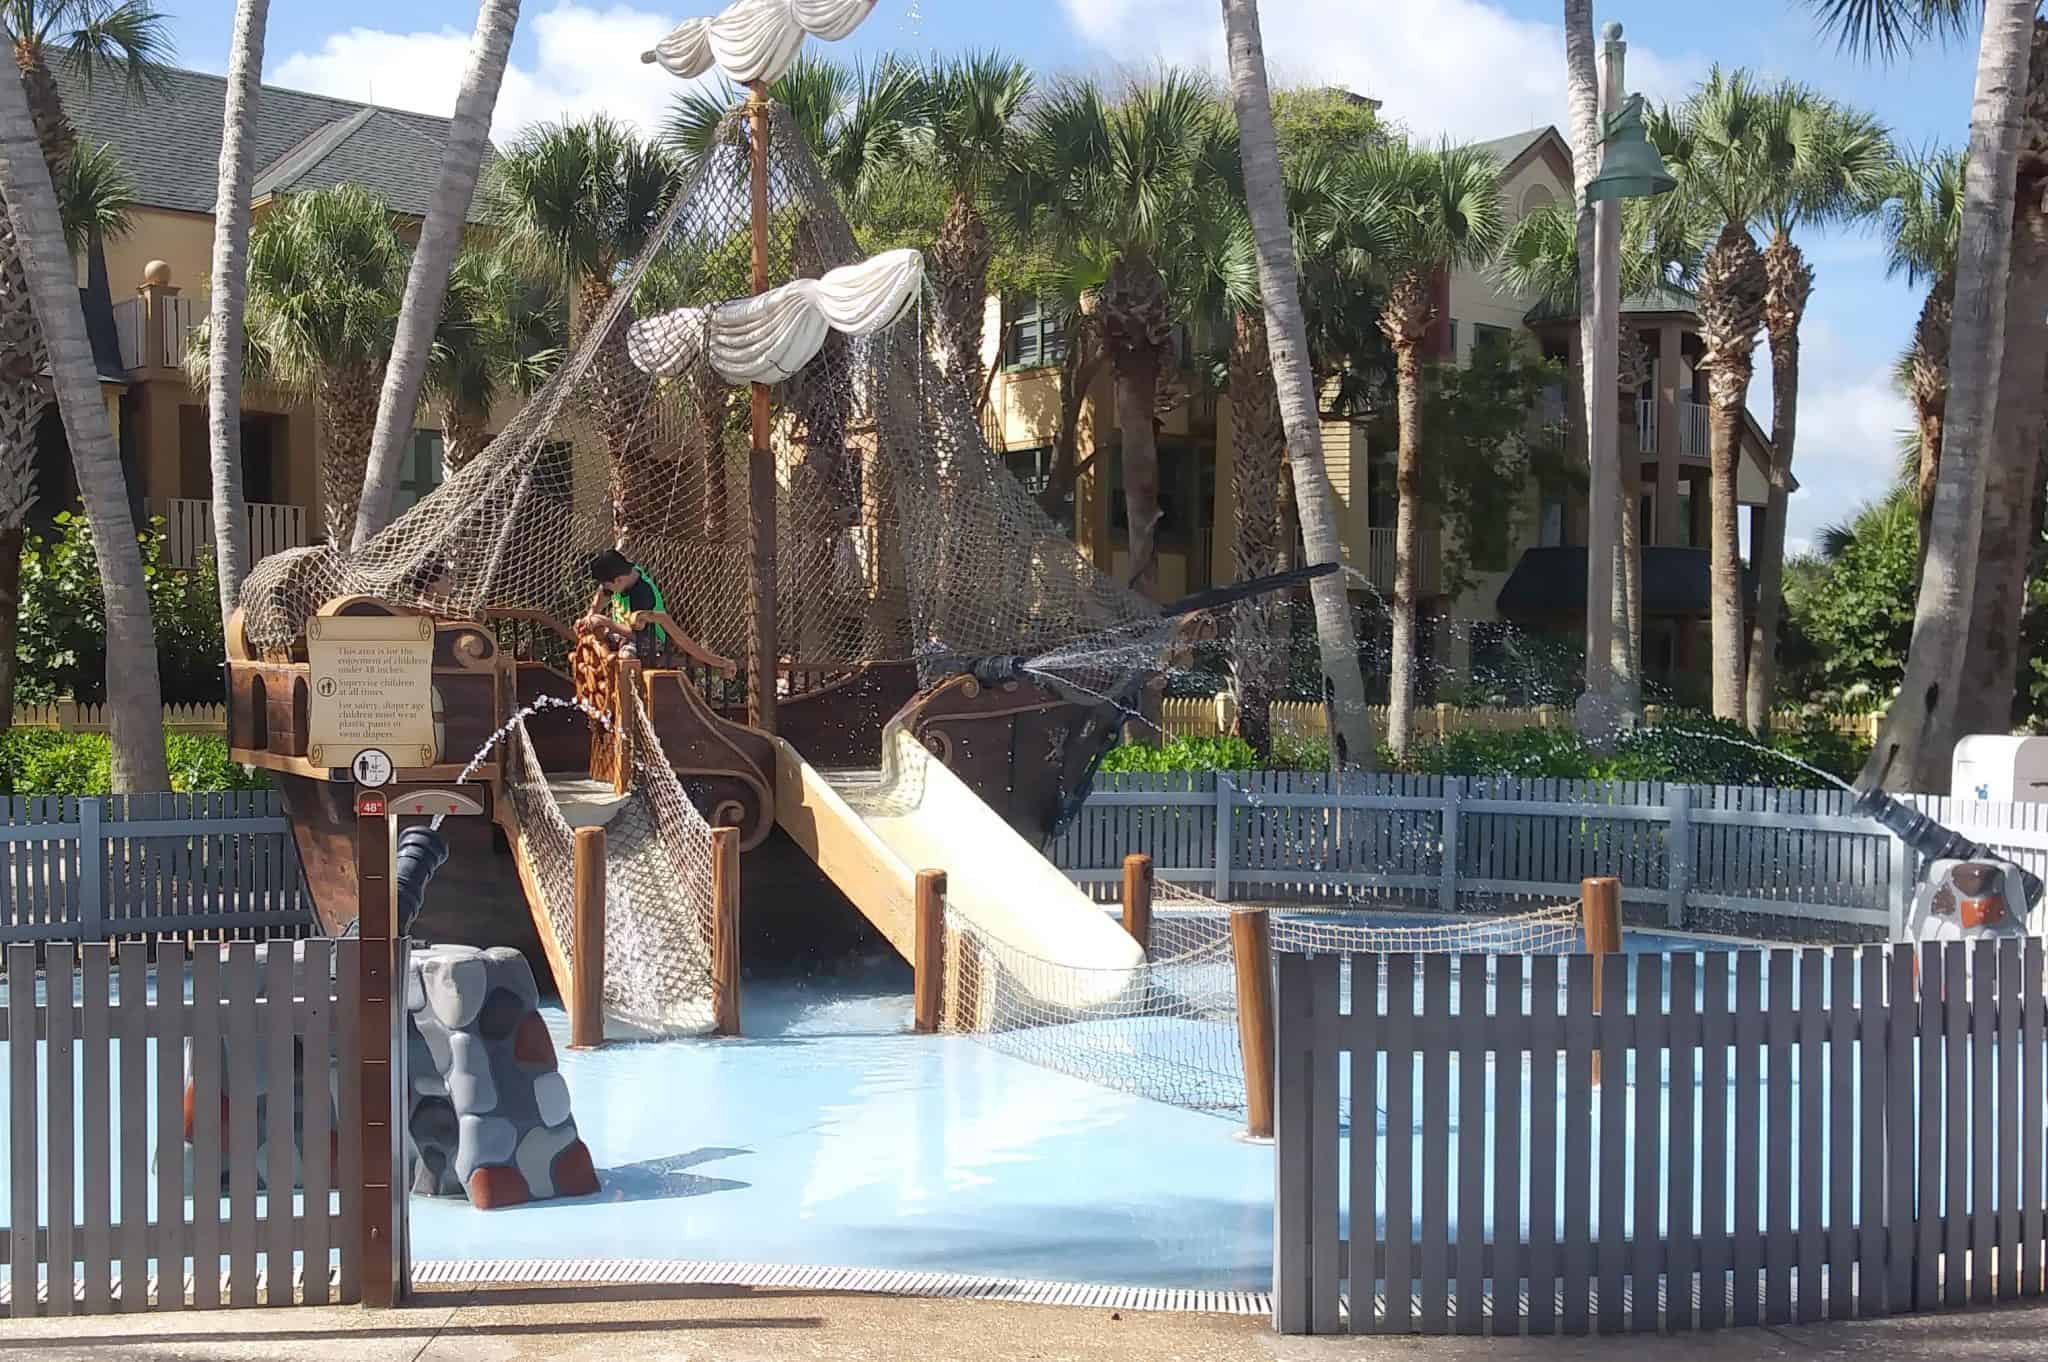 Disney's Vero Beach Resort - Pirate Ship